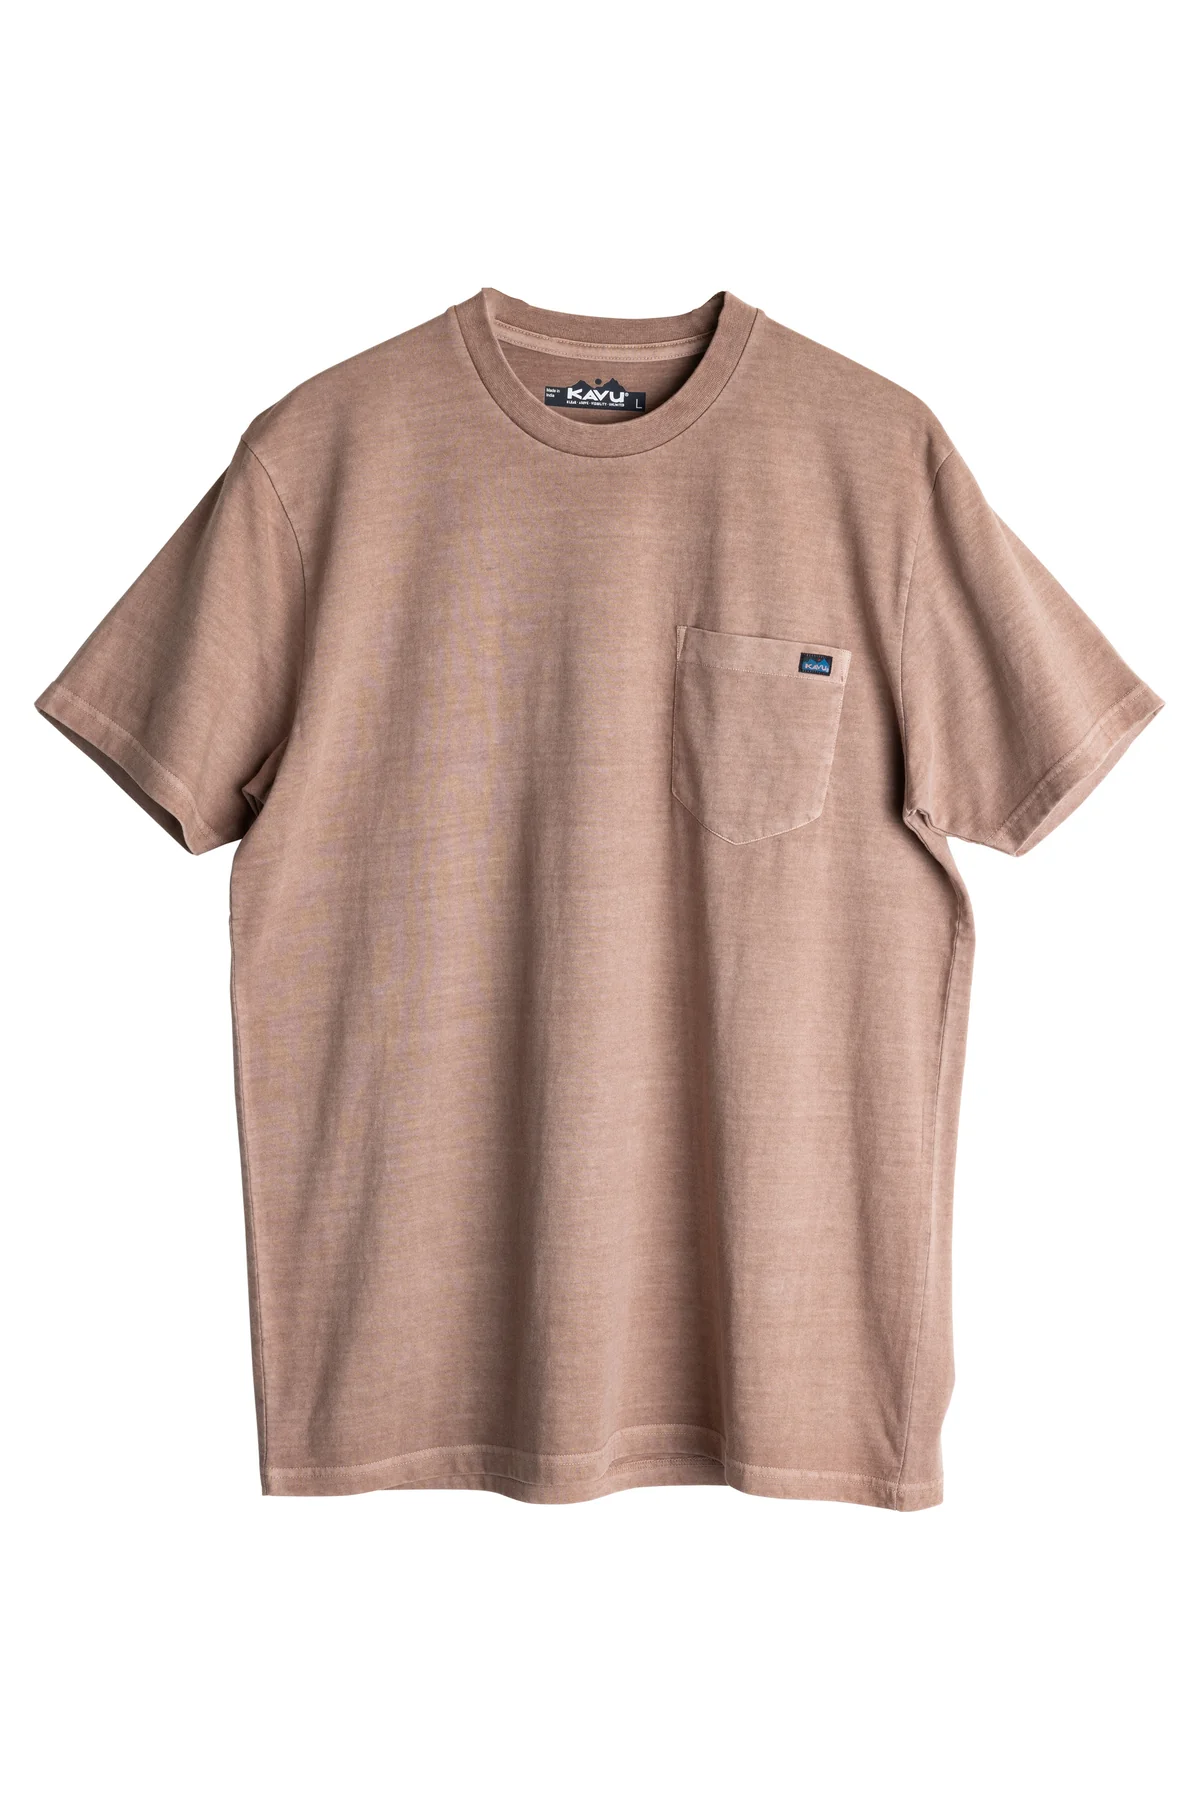 Kavu Side Bar T-Shirt - Dawn Redwood